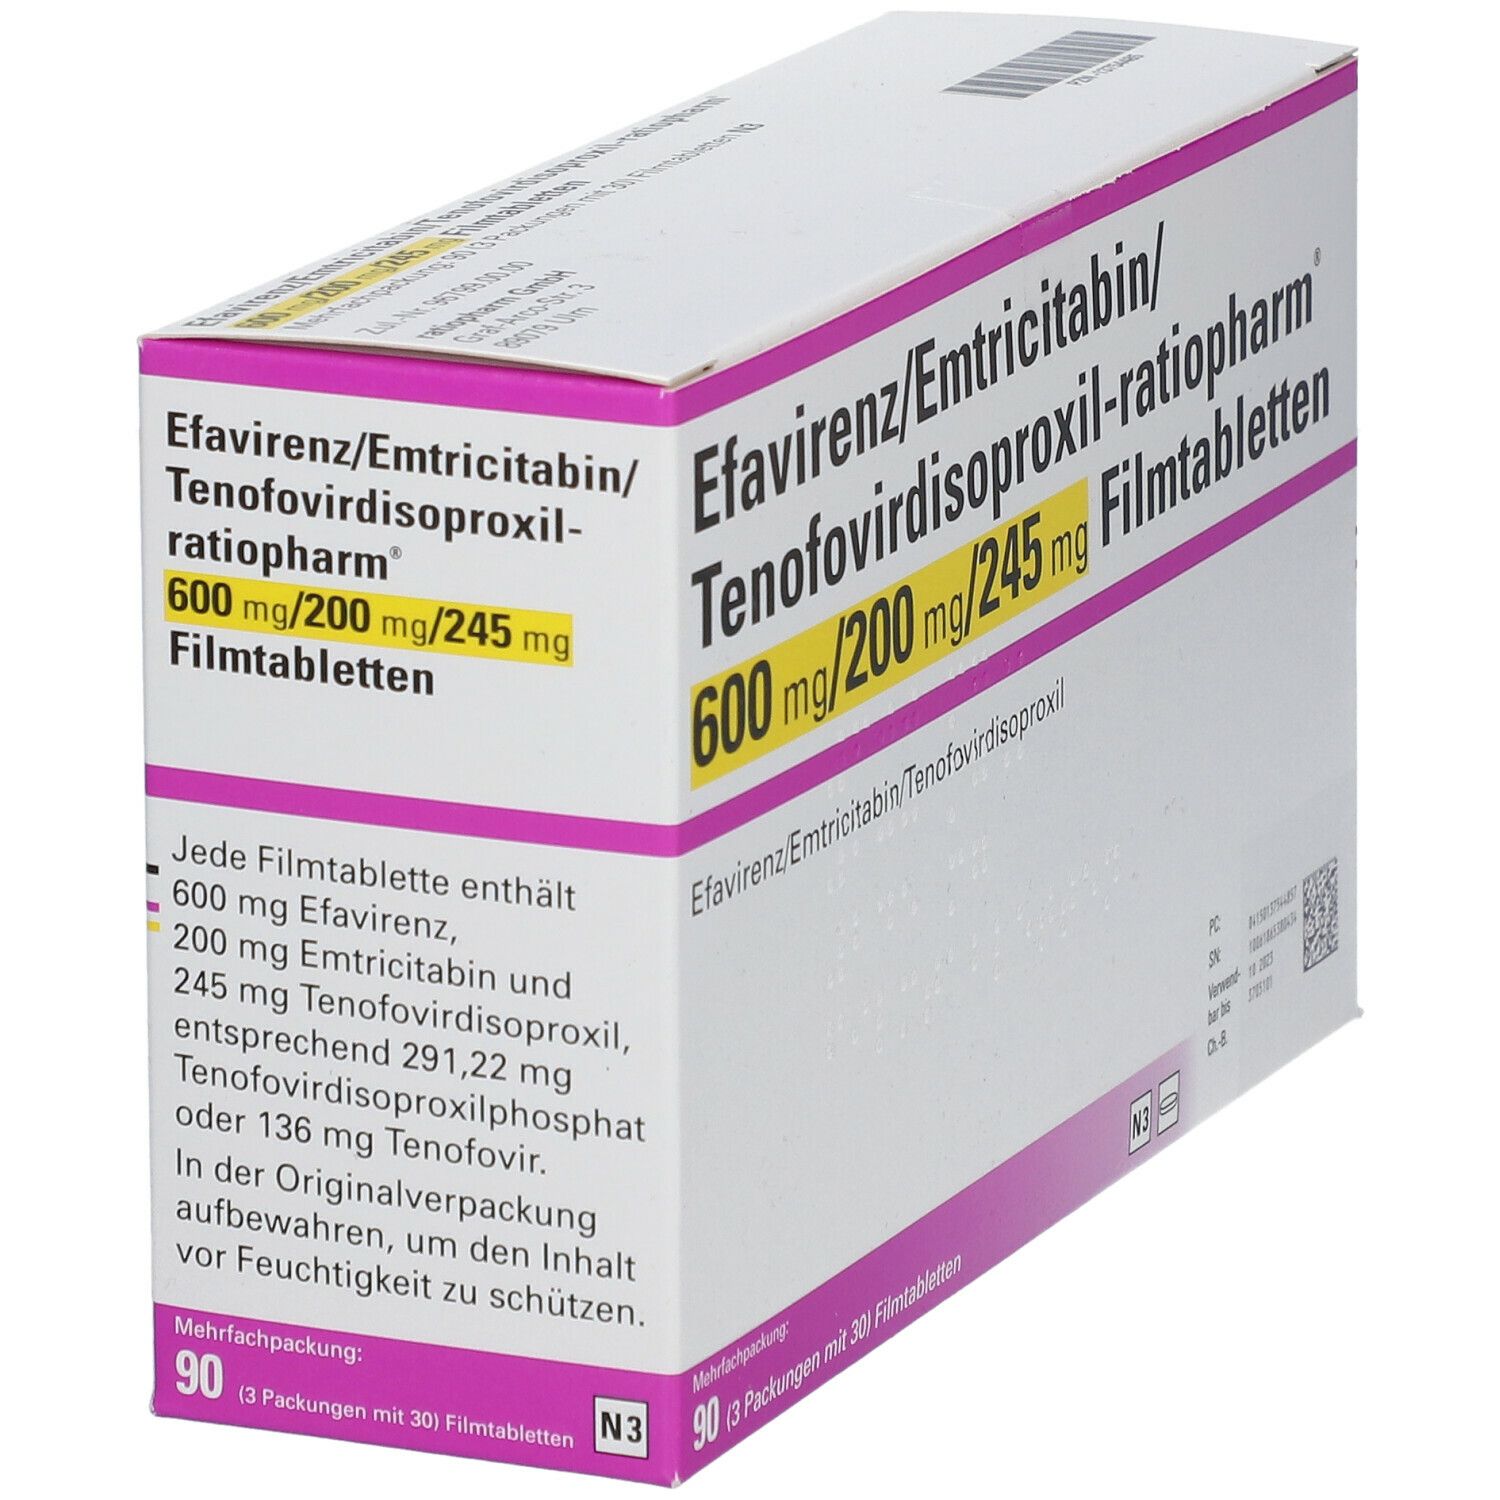 Efavirenz/Emtricitabin/Tenofovirdisoproxil-ratiopharm® 600 mg/200 mg/245 mg